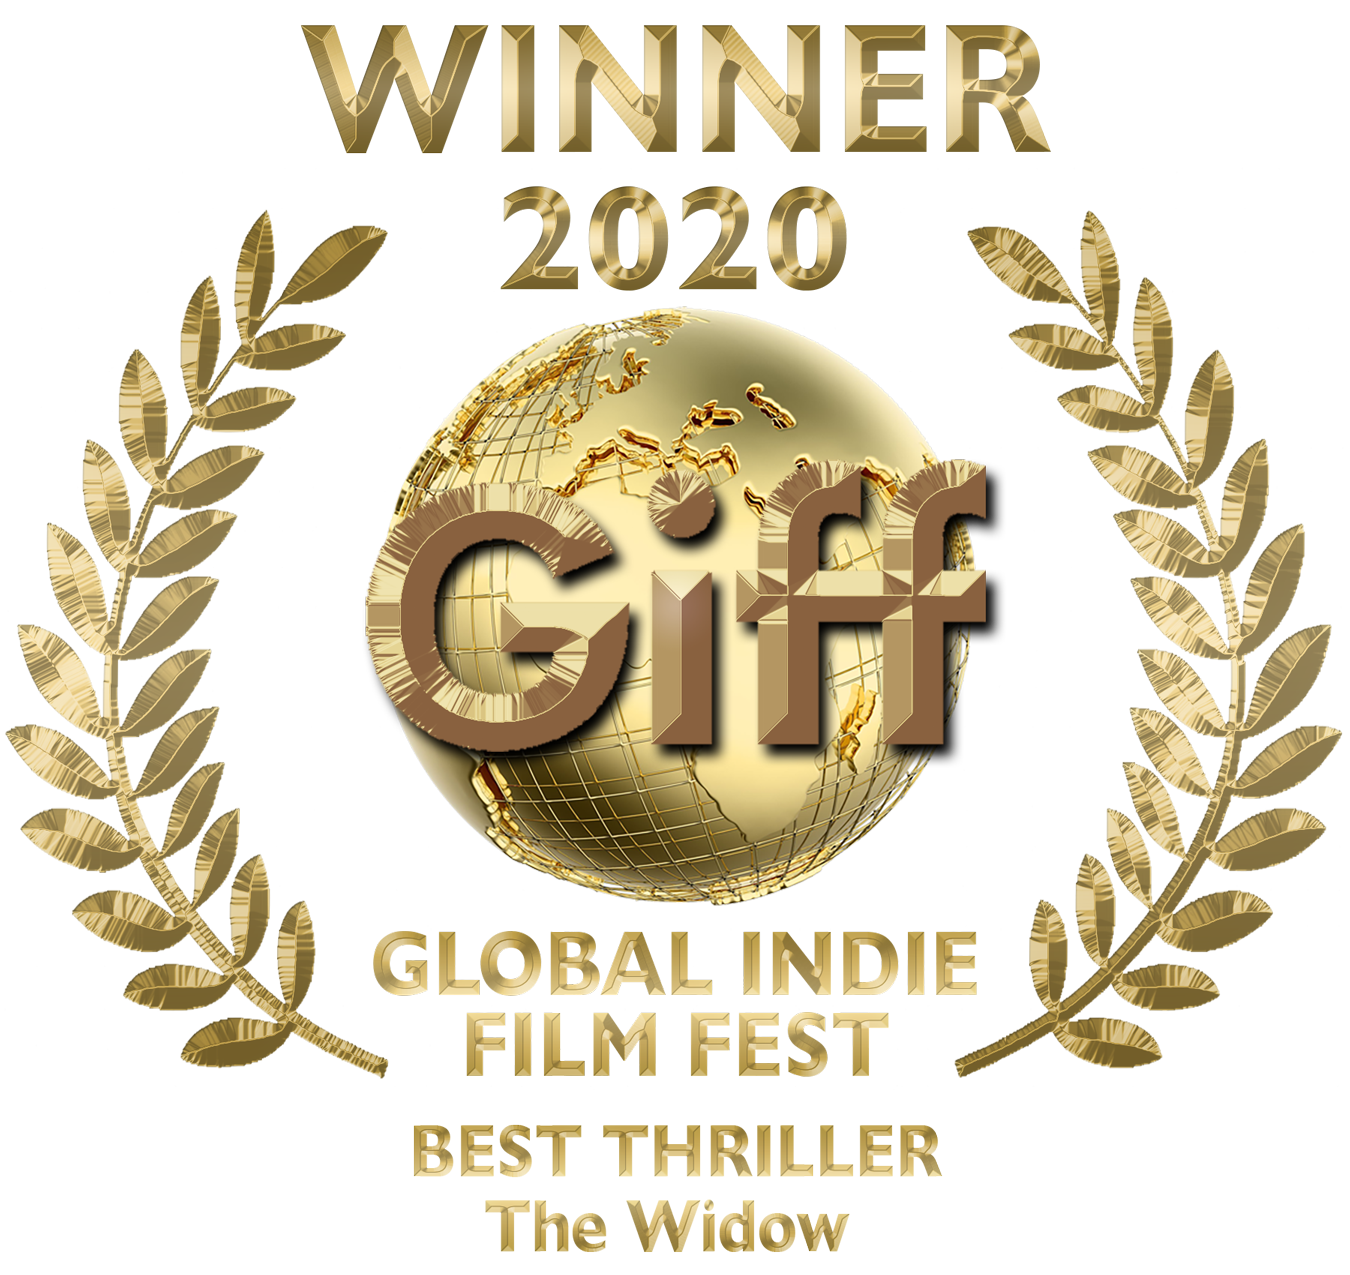 Giff Gold Award Thriller